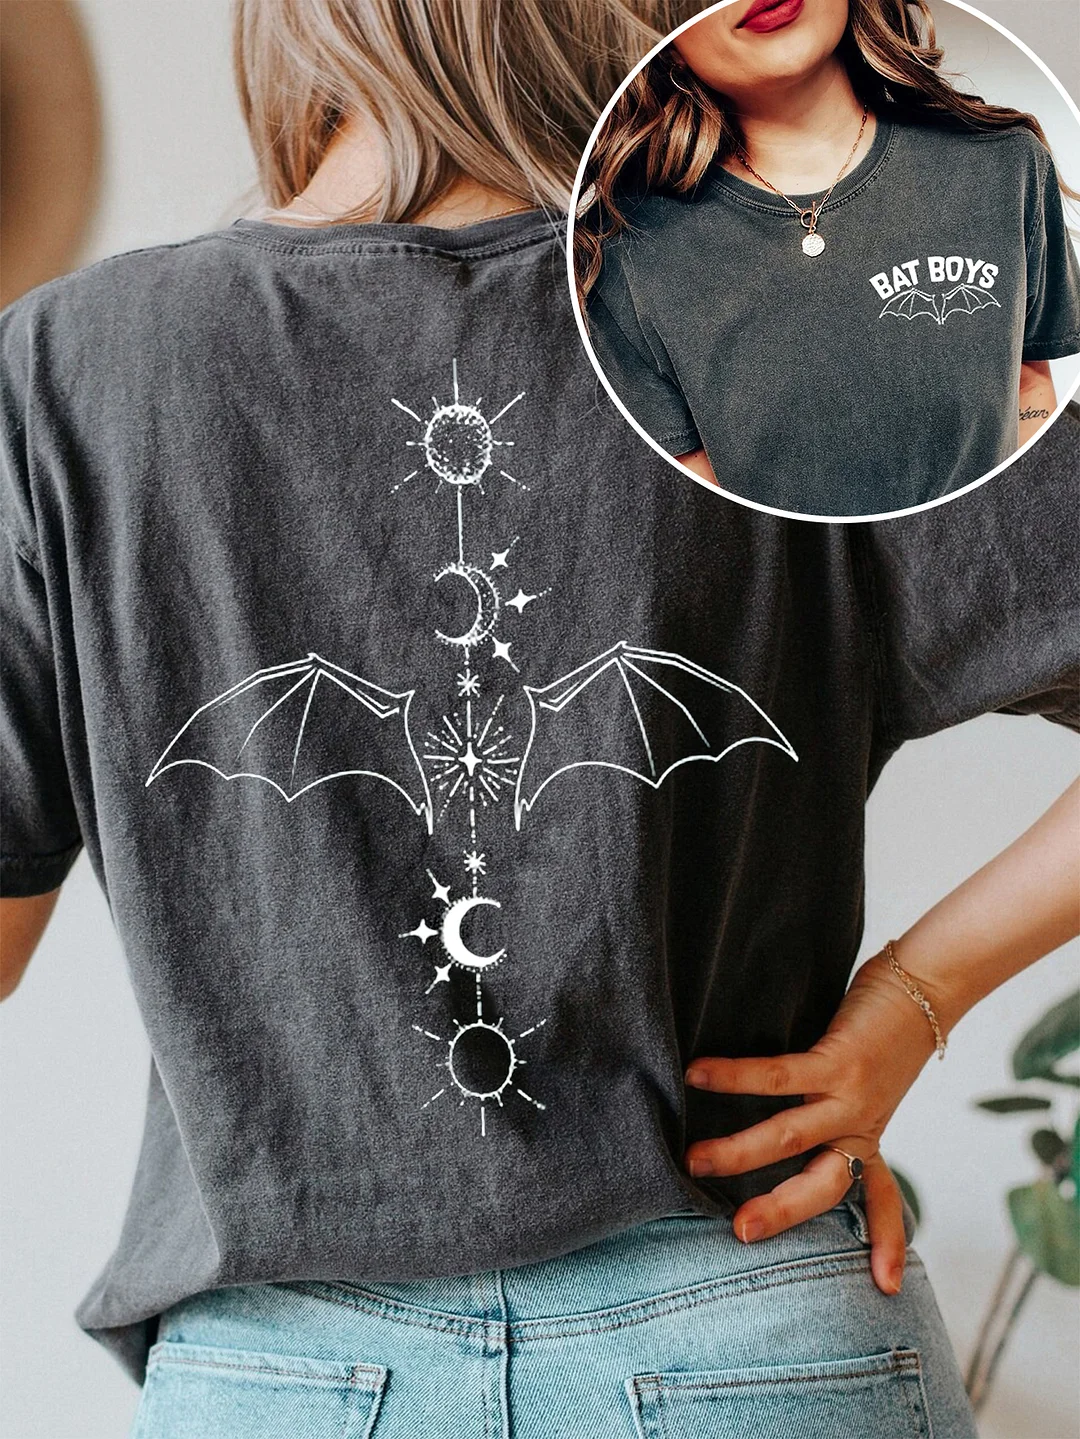 The Bat Boys Wings Double Sided T-Shirt / DarkAcademias /Darkacademias